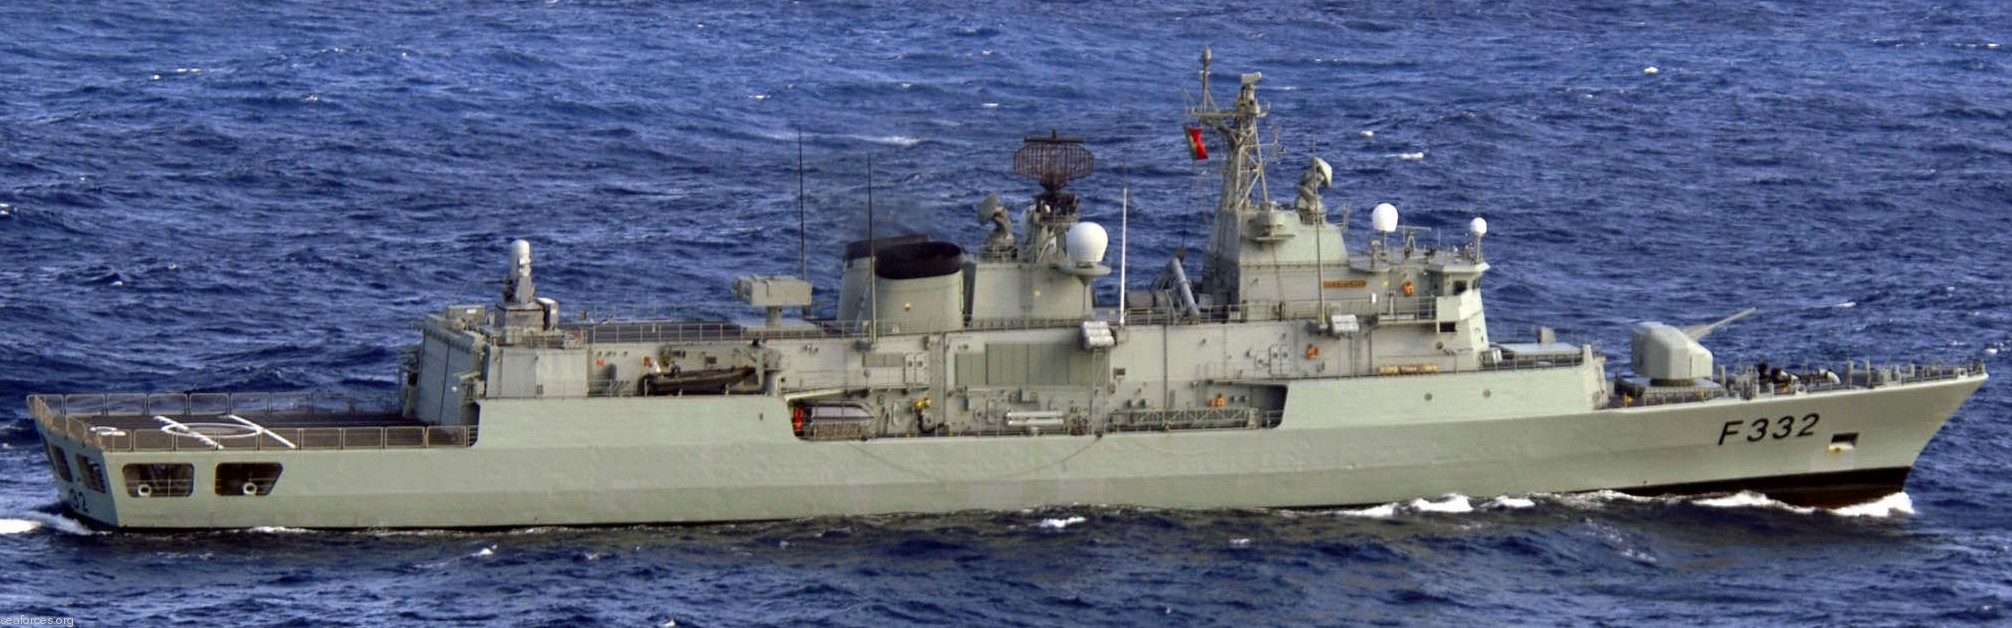 f-332 nrp corte real vasco da gama class meko 200pn frigate portuguese navy 06